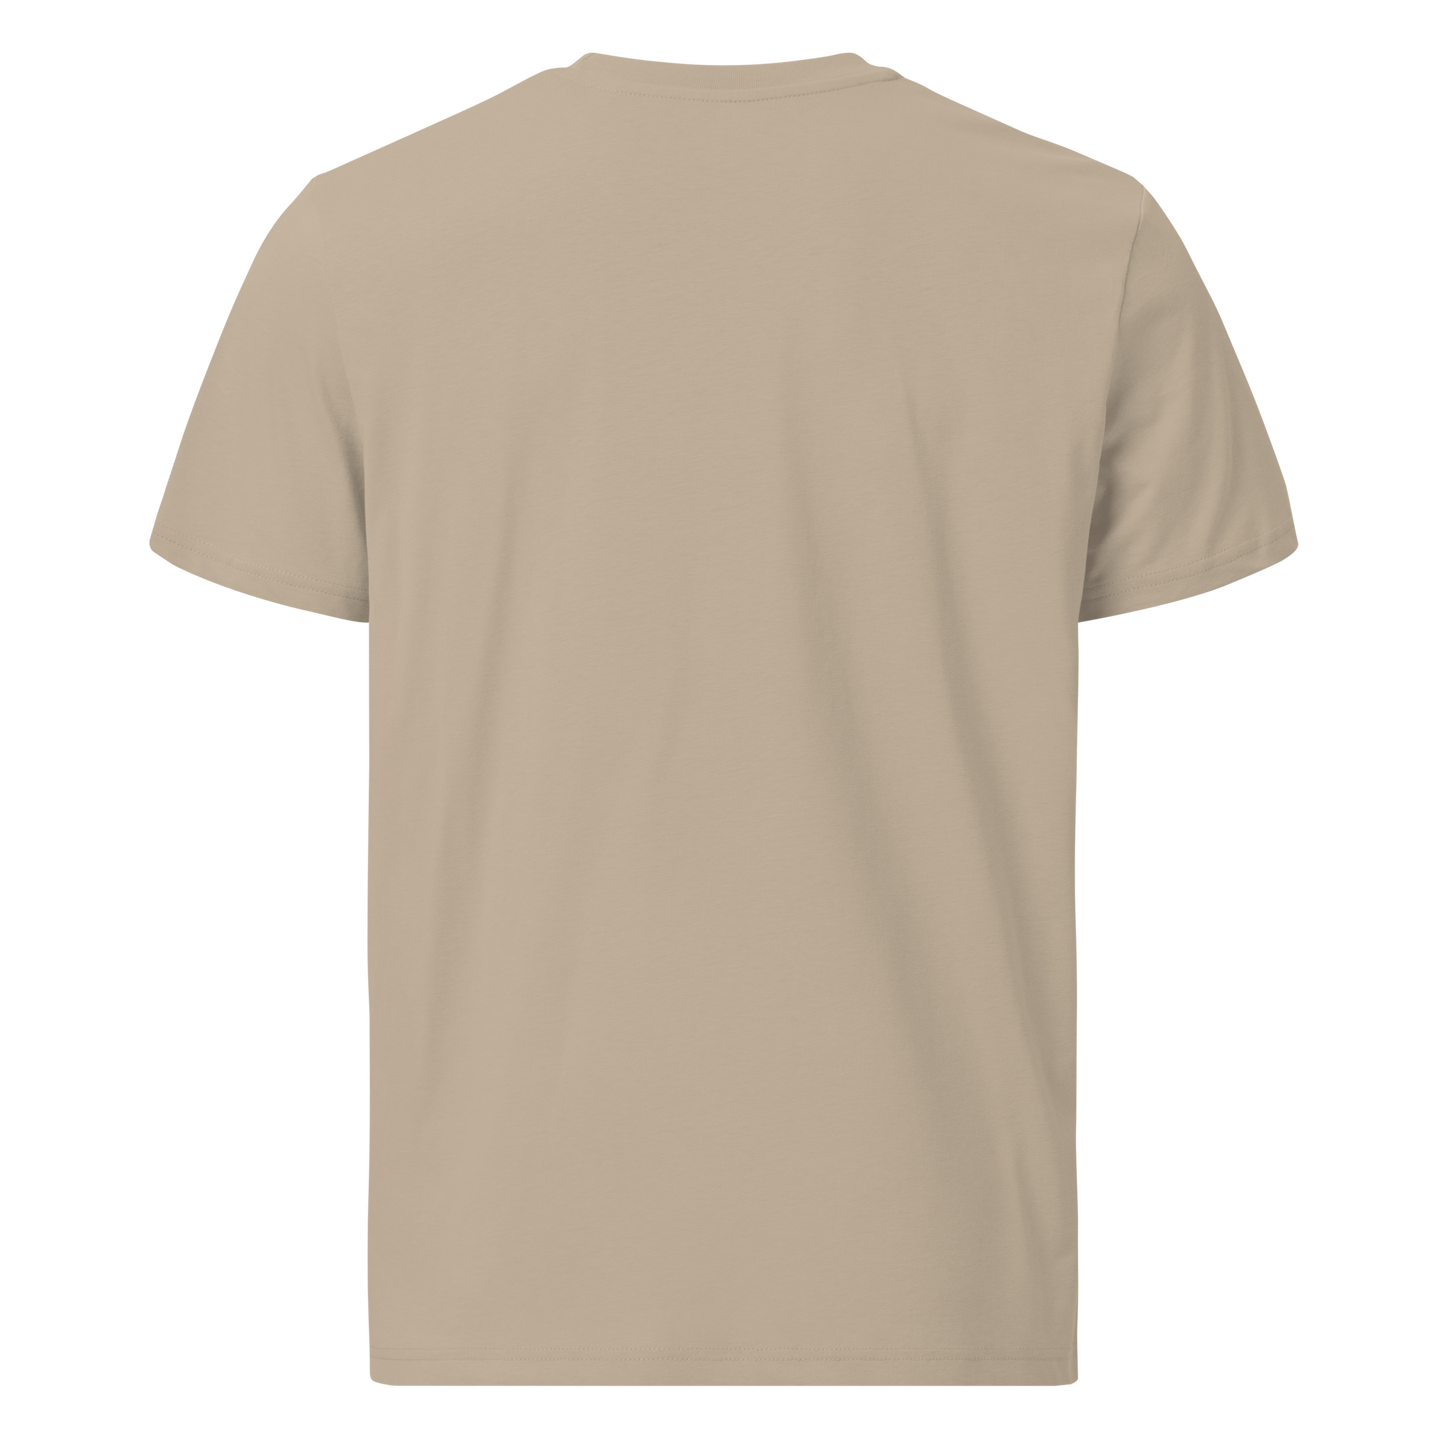 Karleth Mushroom Unisex T-Shirt - Sand front print